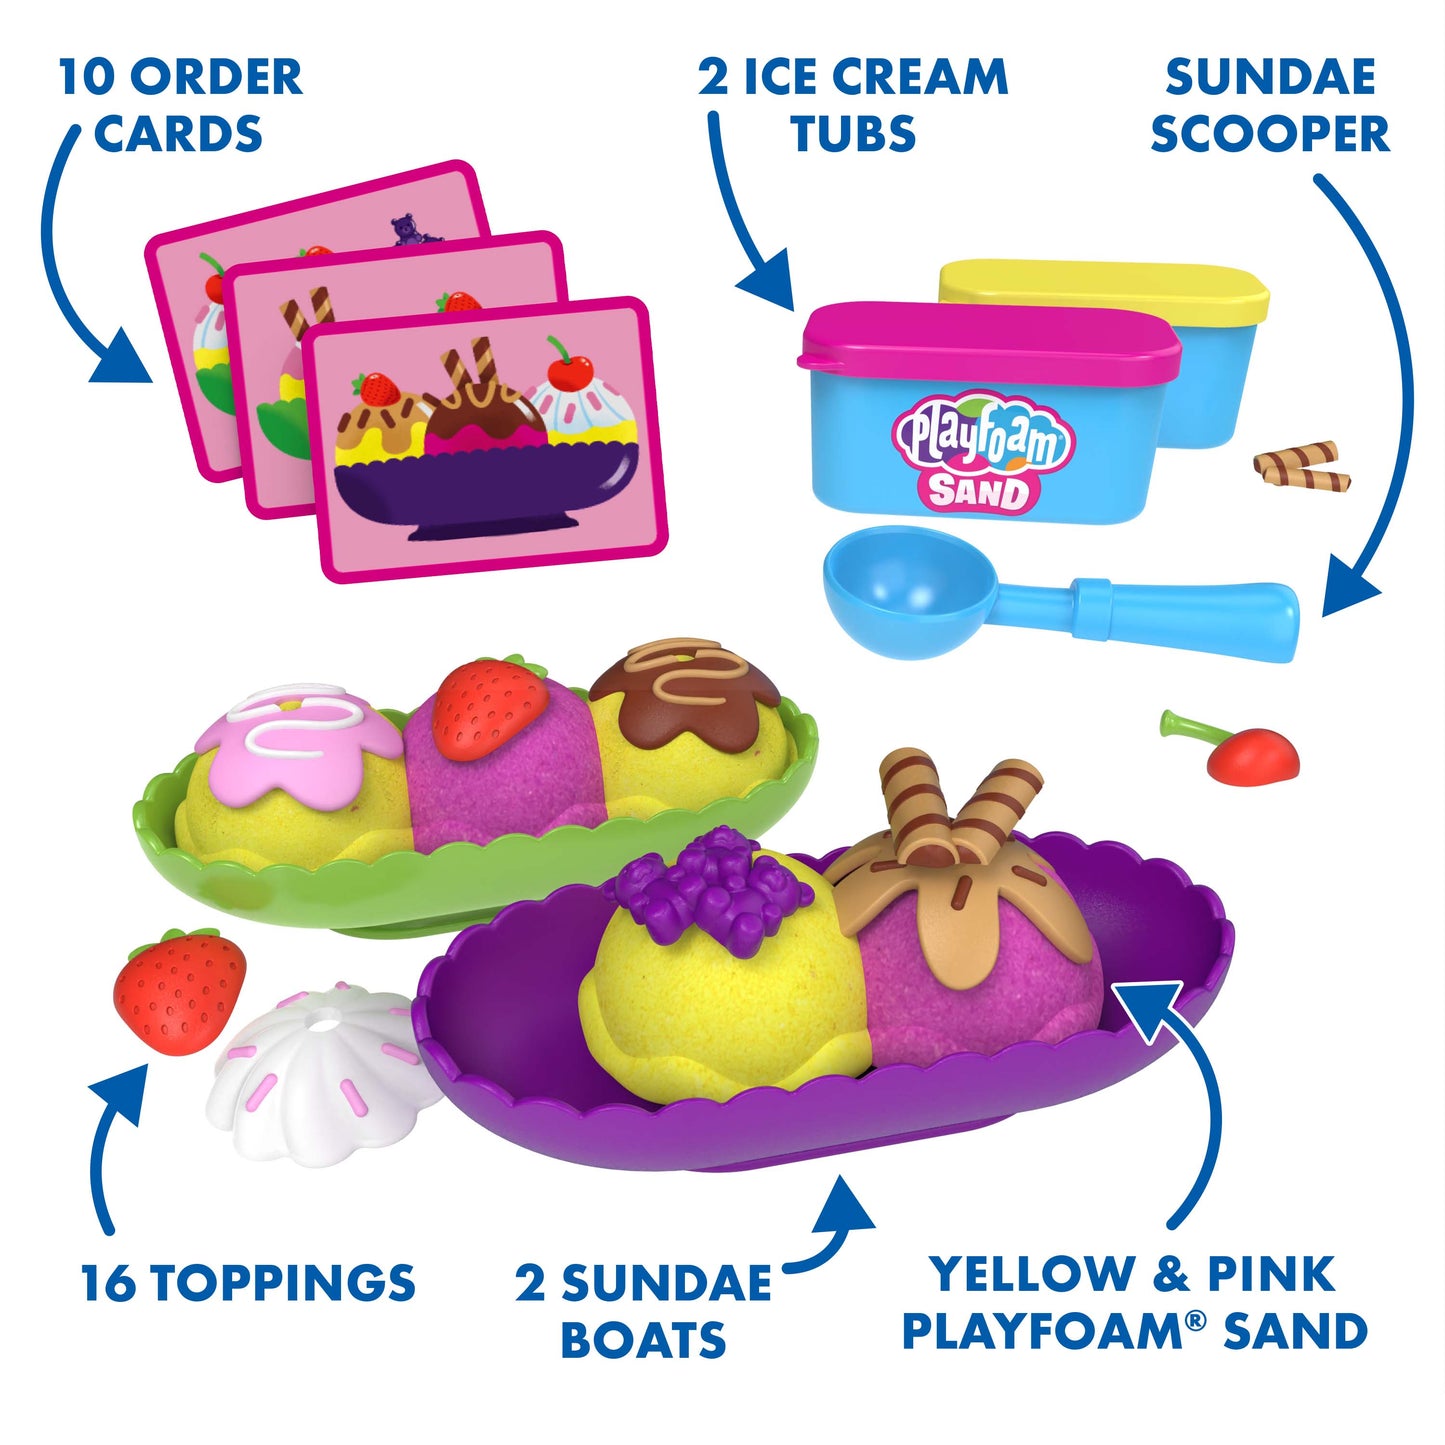 Playfoam Sand Ice Cream Sunday Set